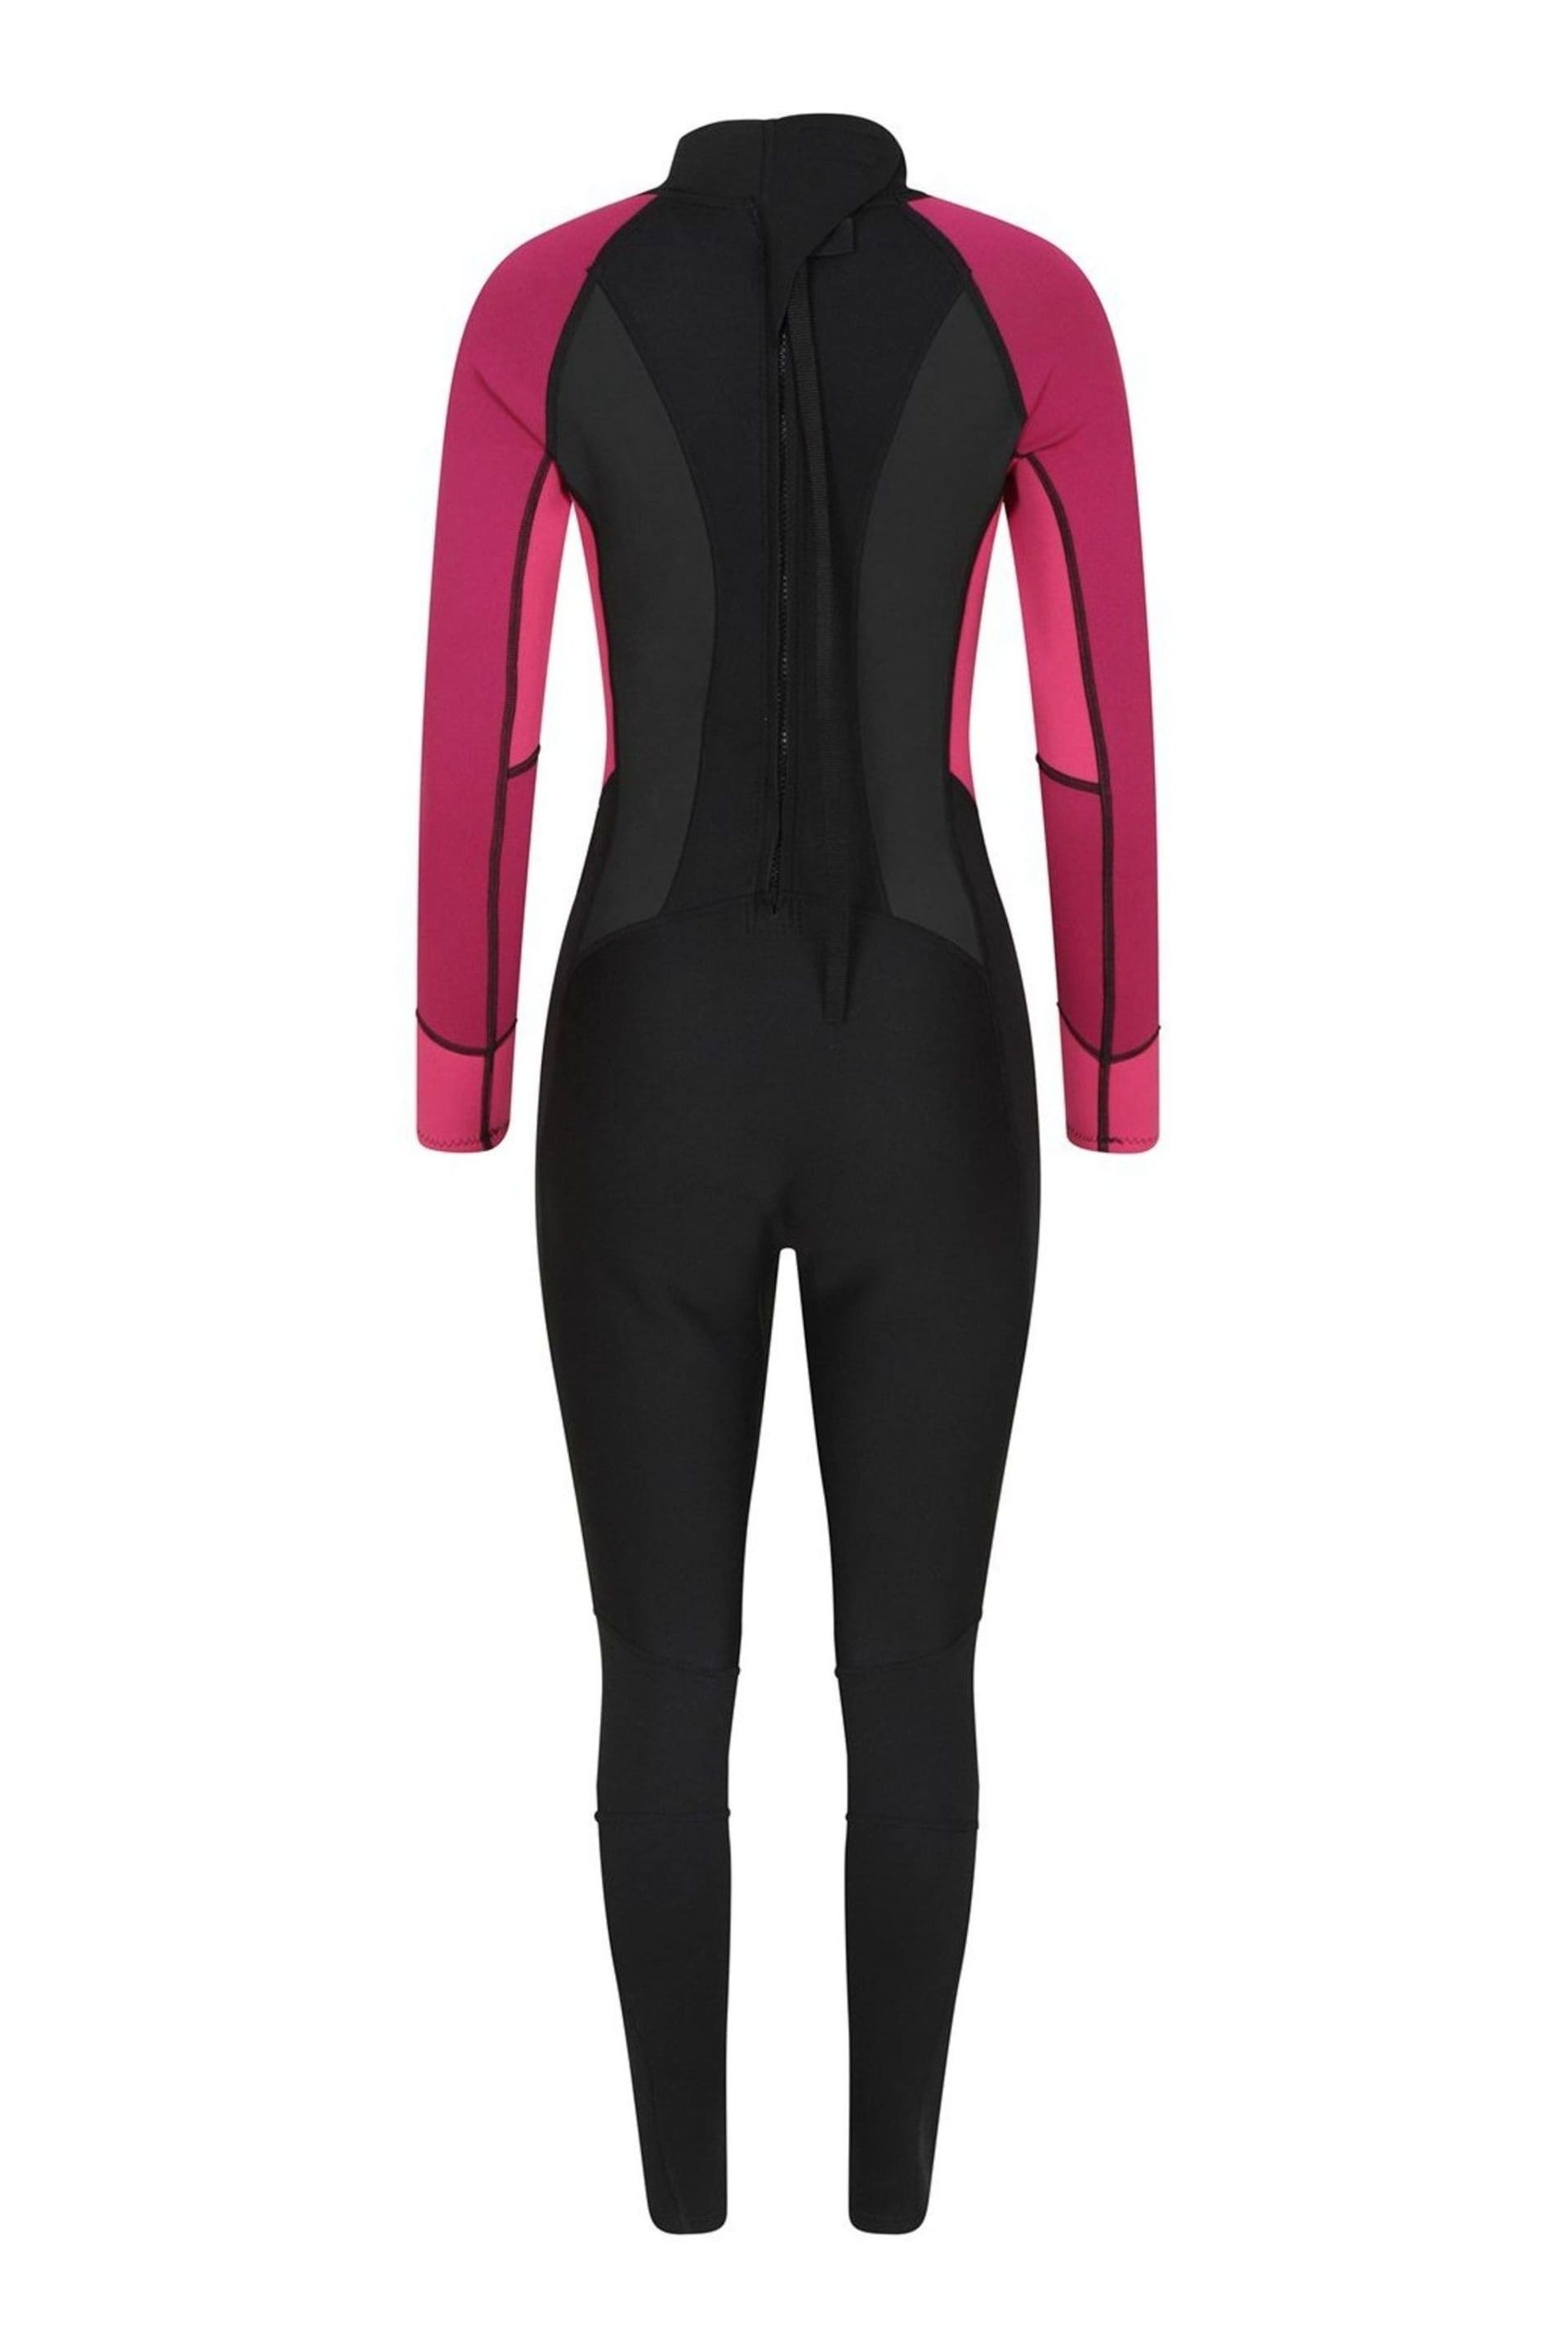 Mountain Warehouse Pink Womens Full Length Neoprene Wetsuit - Image 3 of 4